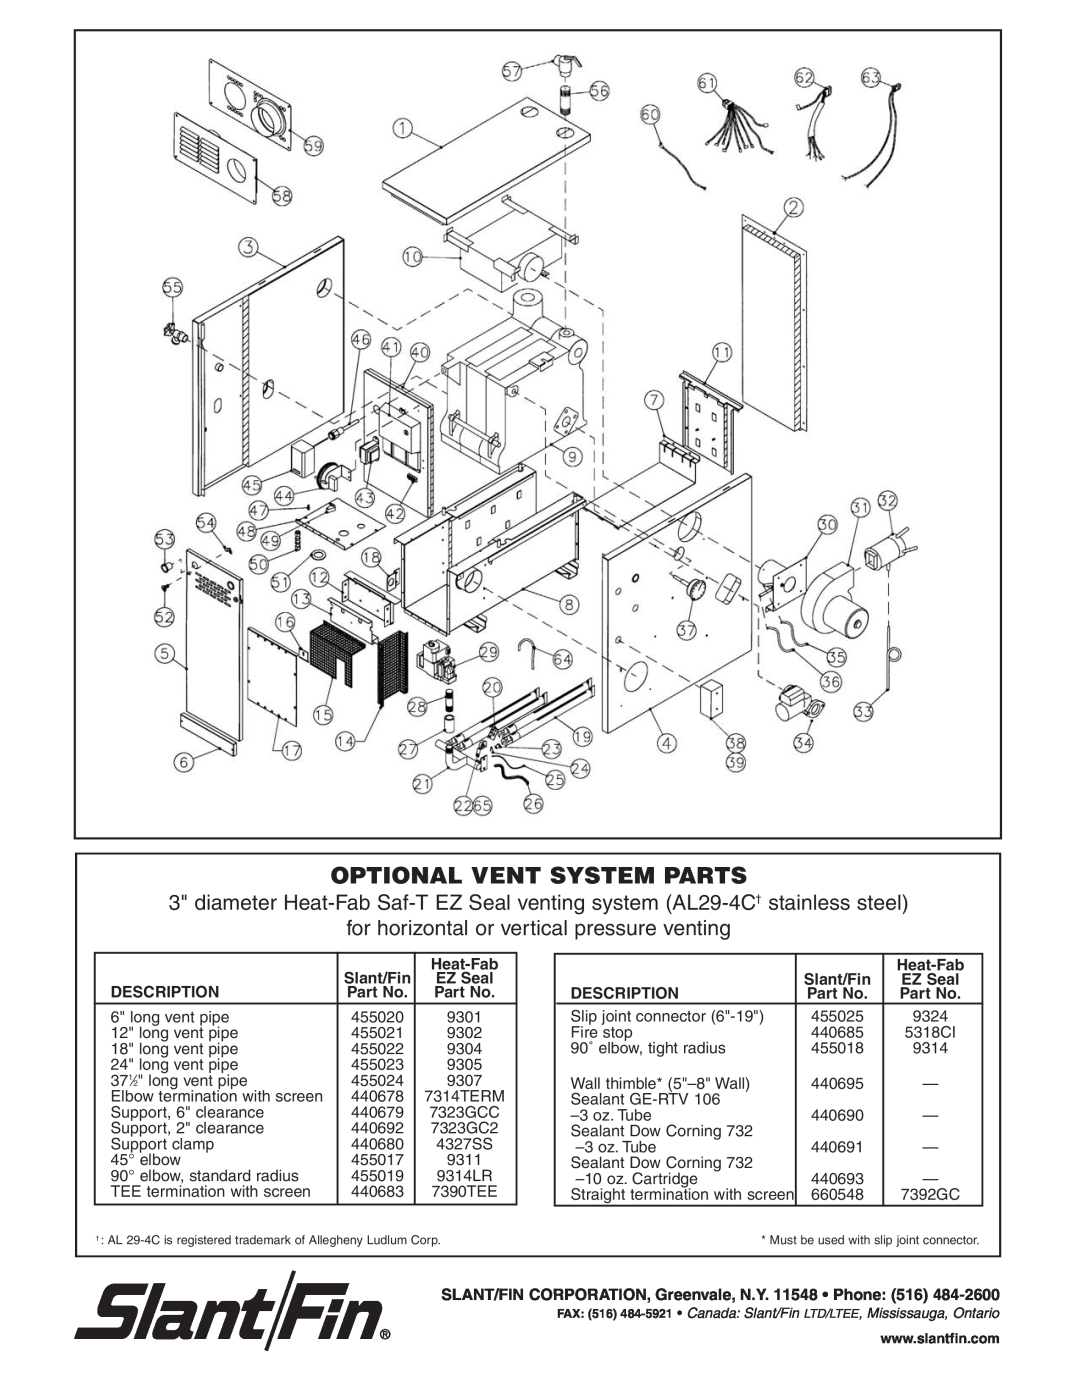 Slant/Fin VSPH-120, VSPH-150, VSPH-90 manual Optional Vent System Parts, for horizontal or vertical pressure venting 